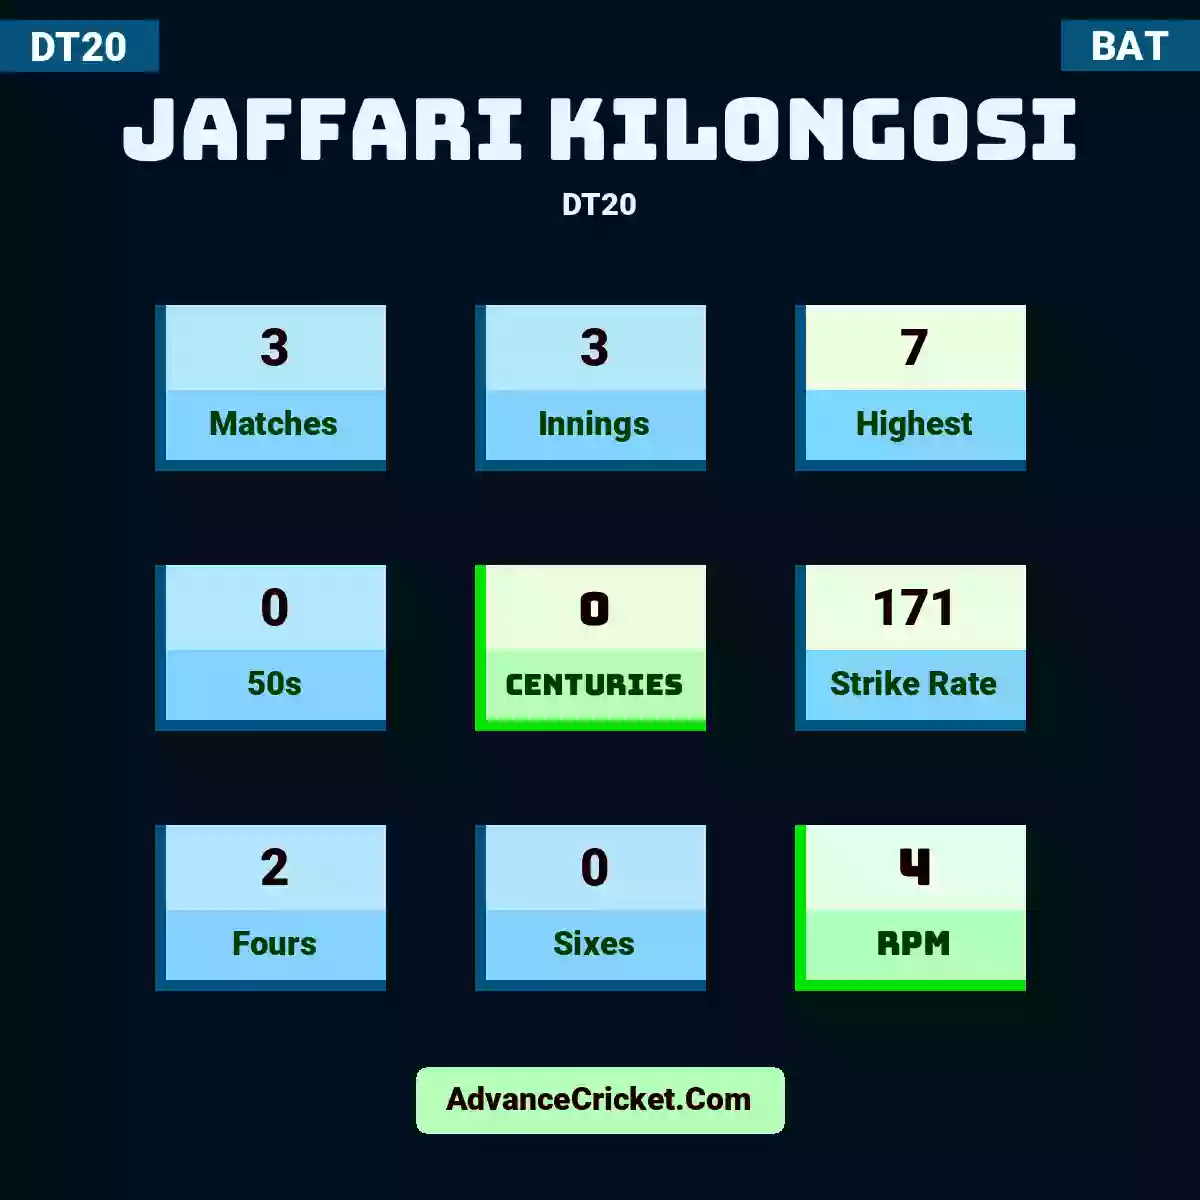 Jaffari Kilongosi DT20 , Jaffari Kilongosi played 3 matches, scored 7 runs as highest, 0 half-centuries, and 0 centuries, with a strike rate of 171. J.Kilongosi hit 2 fours and 0 sixes, with an RPM of 4.